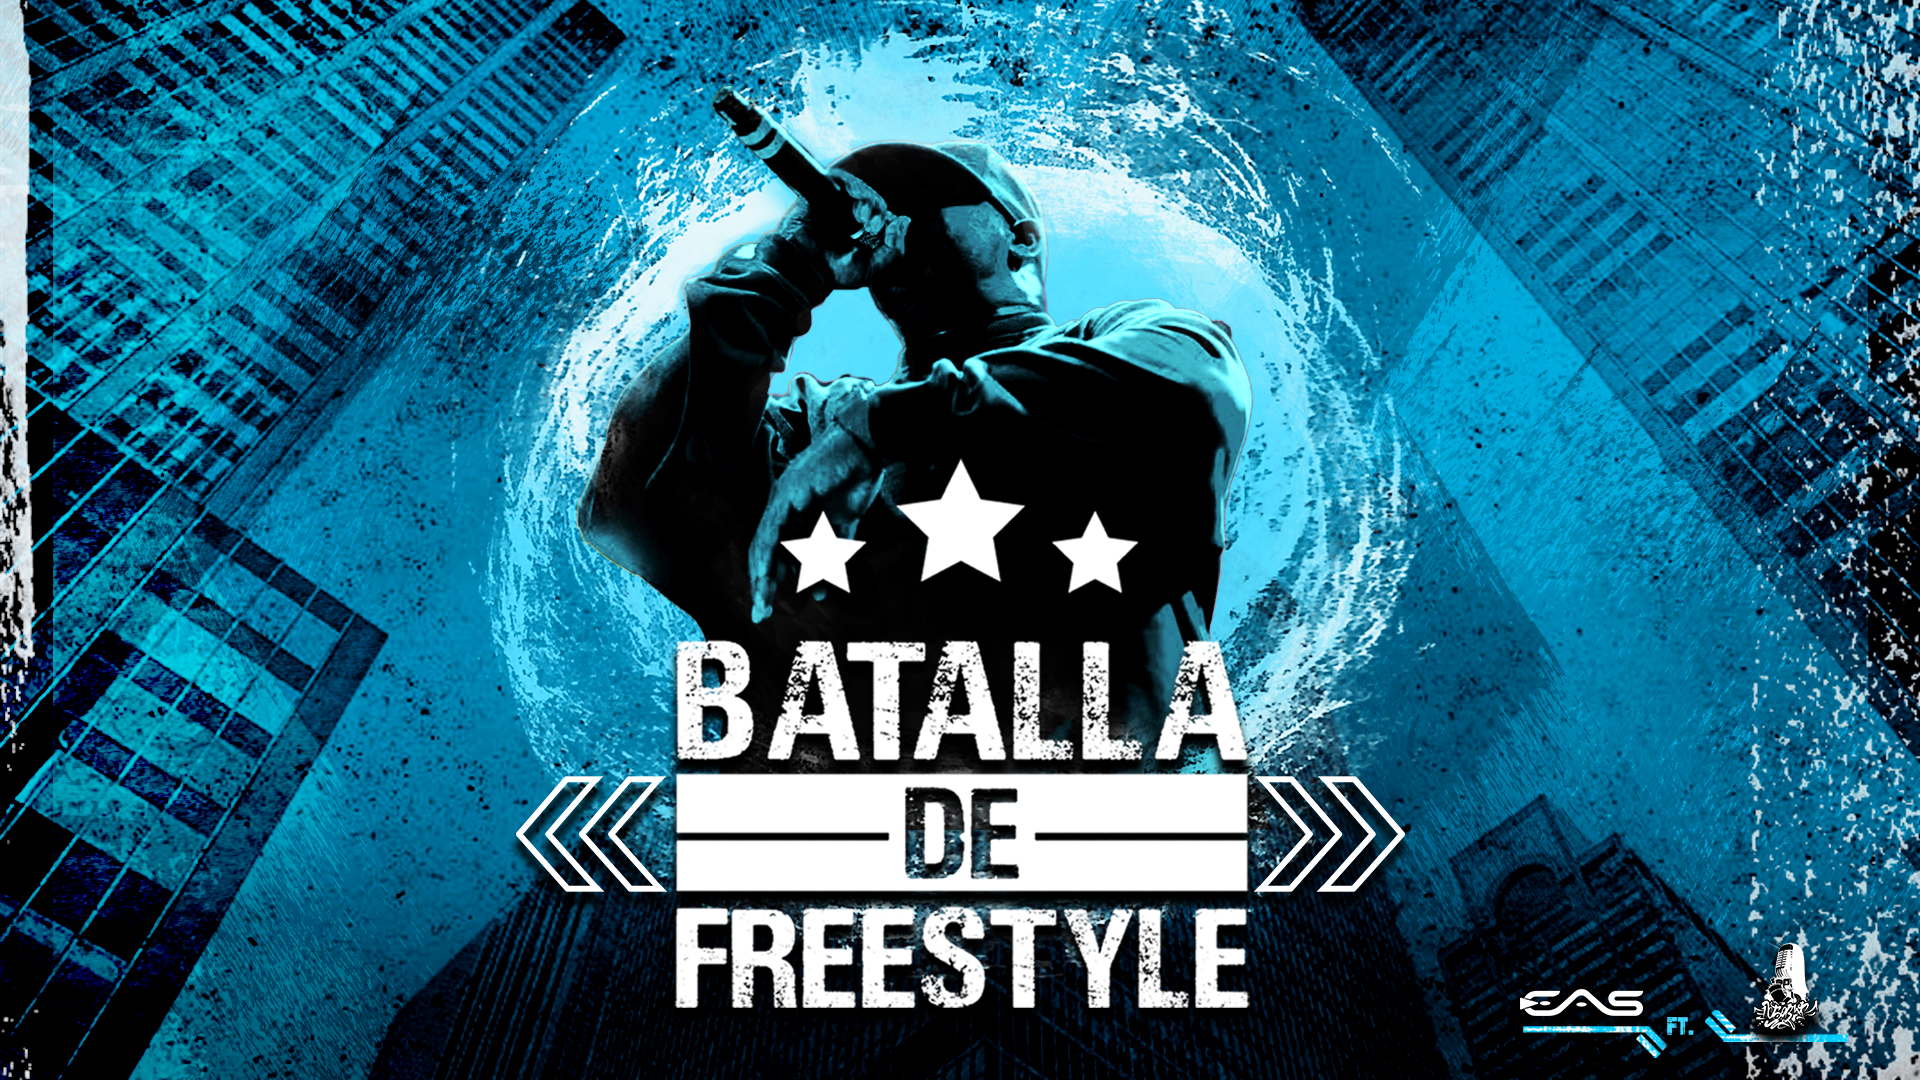 BATALLE DE FREESTYLE